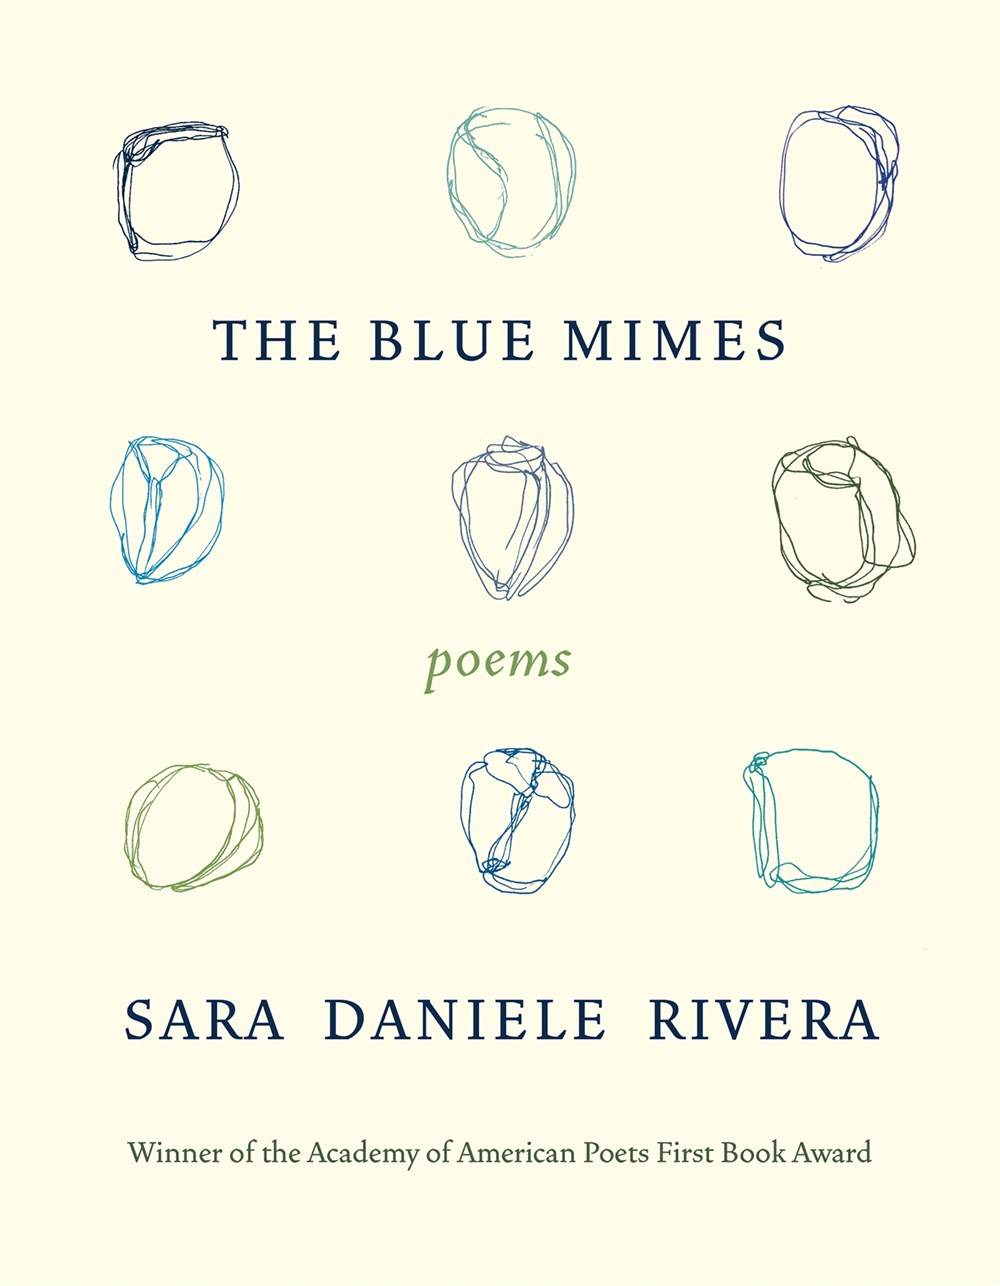 The Blue Mimes by Sara Daniele Rivera